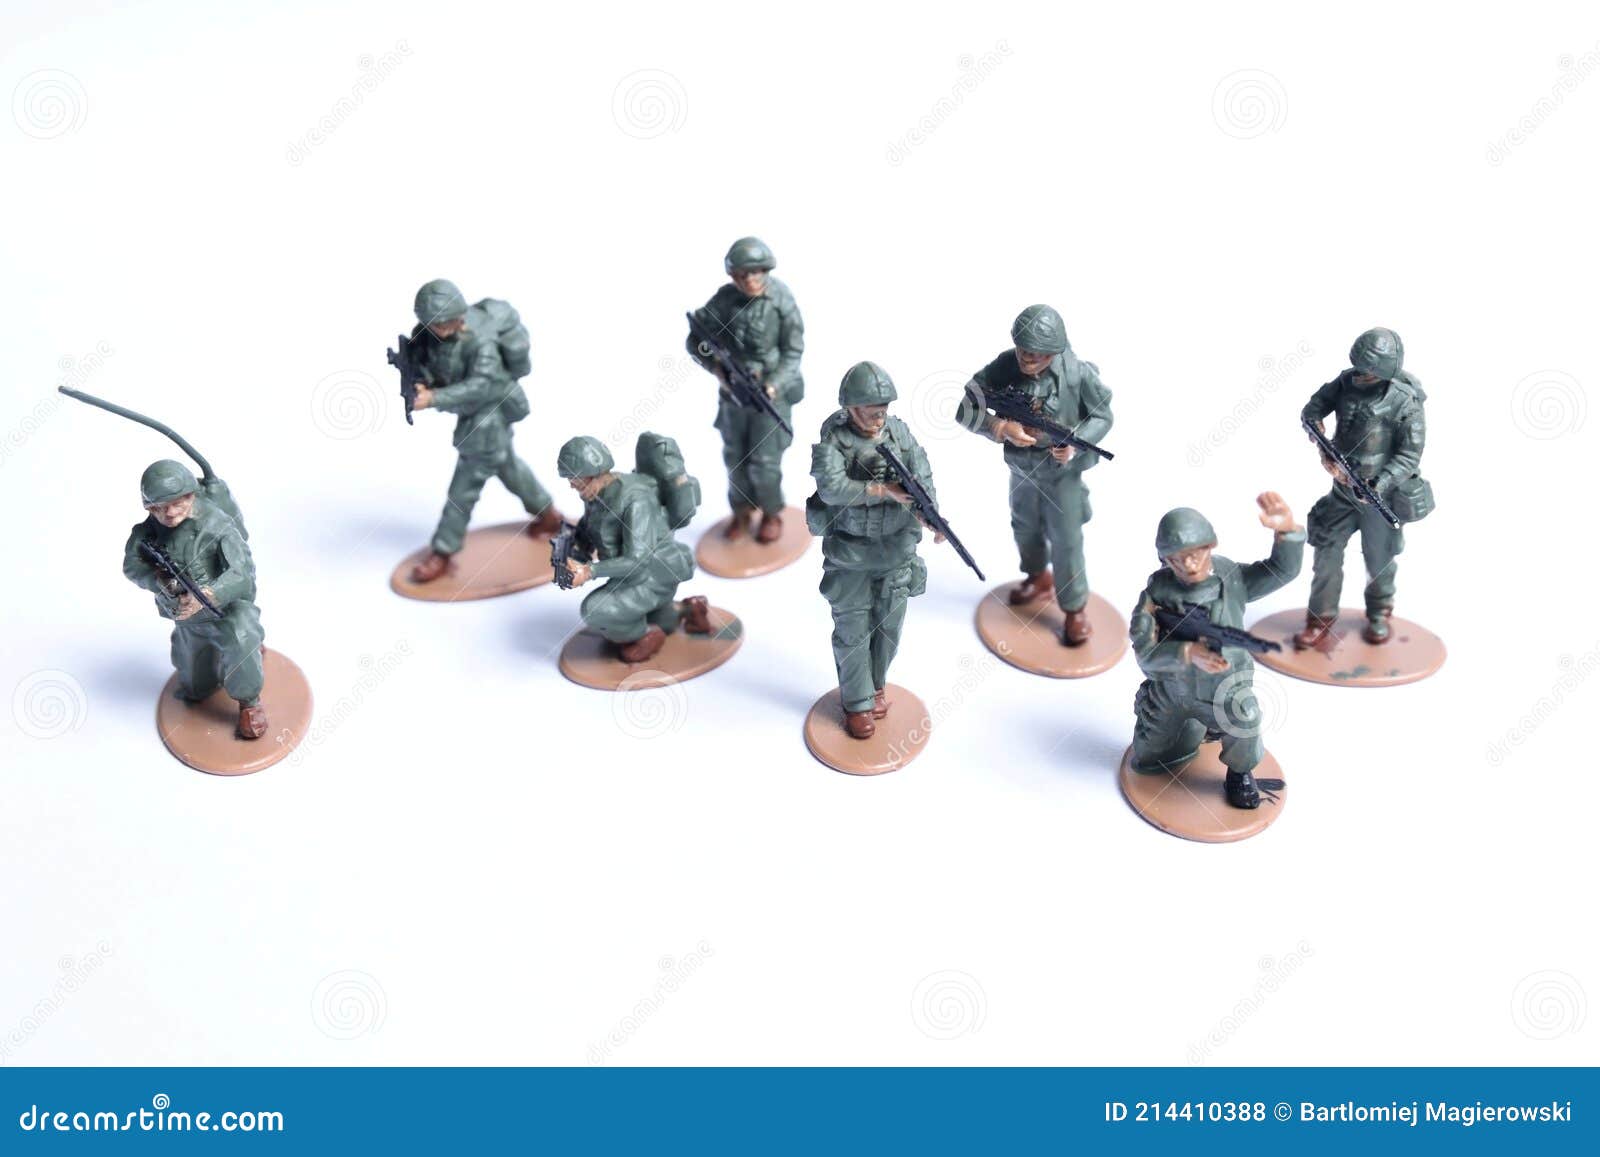 British Troops in Afghanistan - Plastic Figurines Stock Photo - Image of  hand, figurines: 214410388